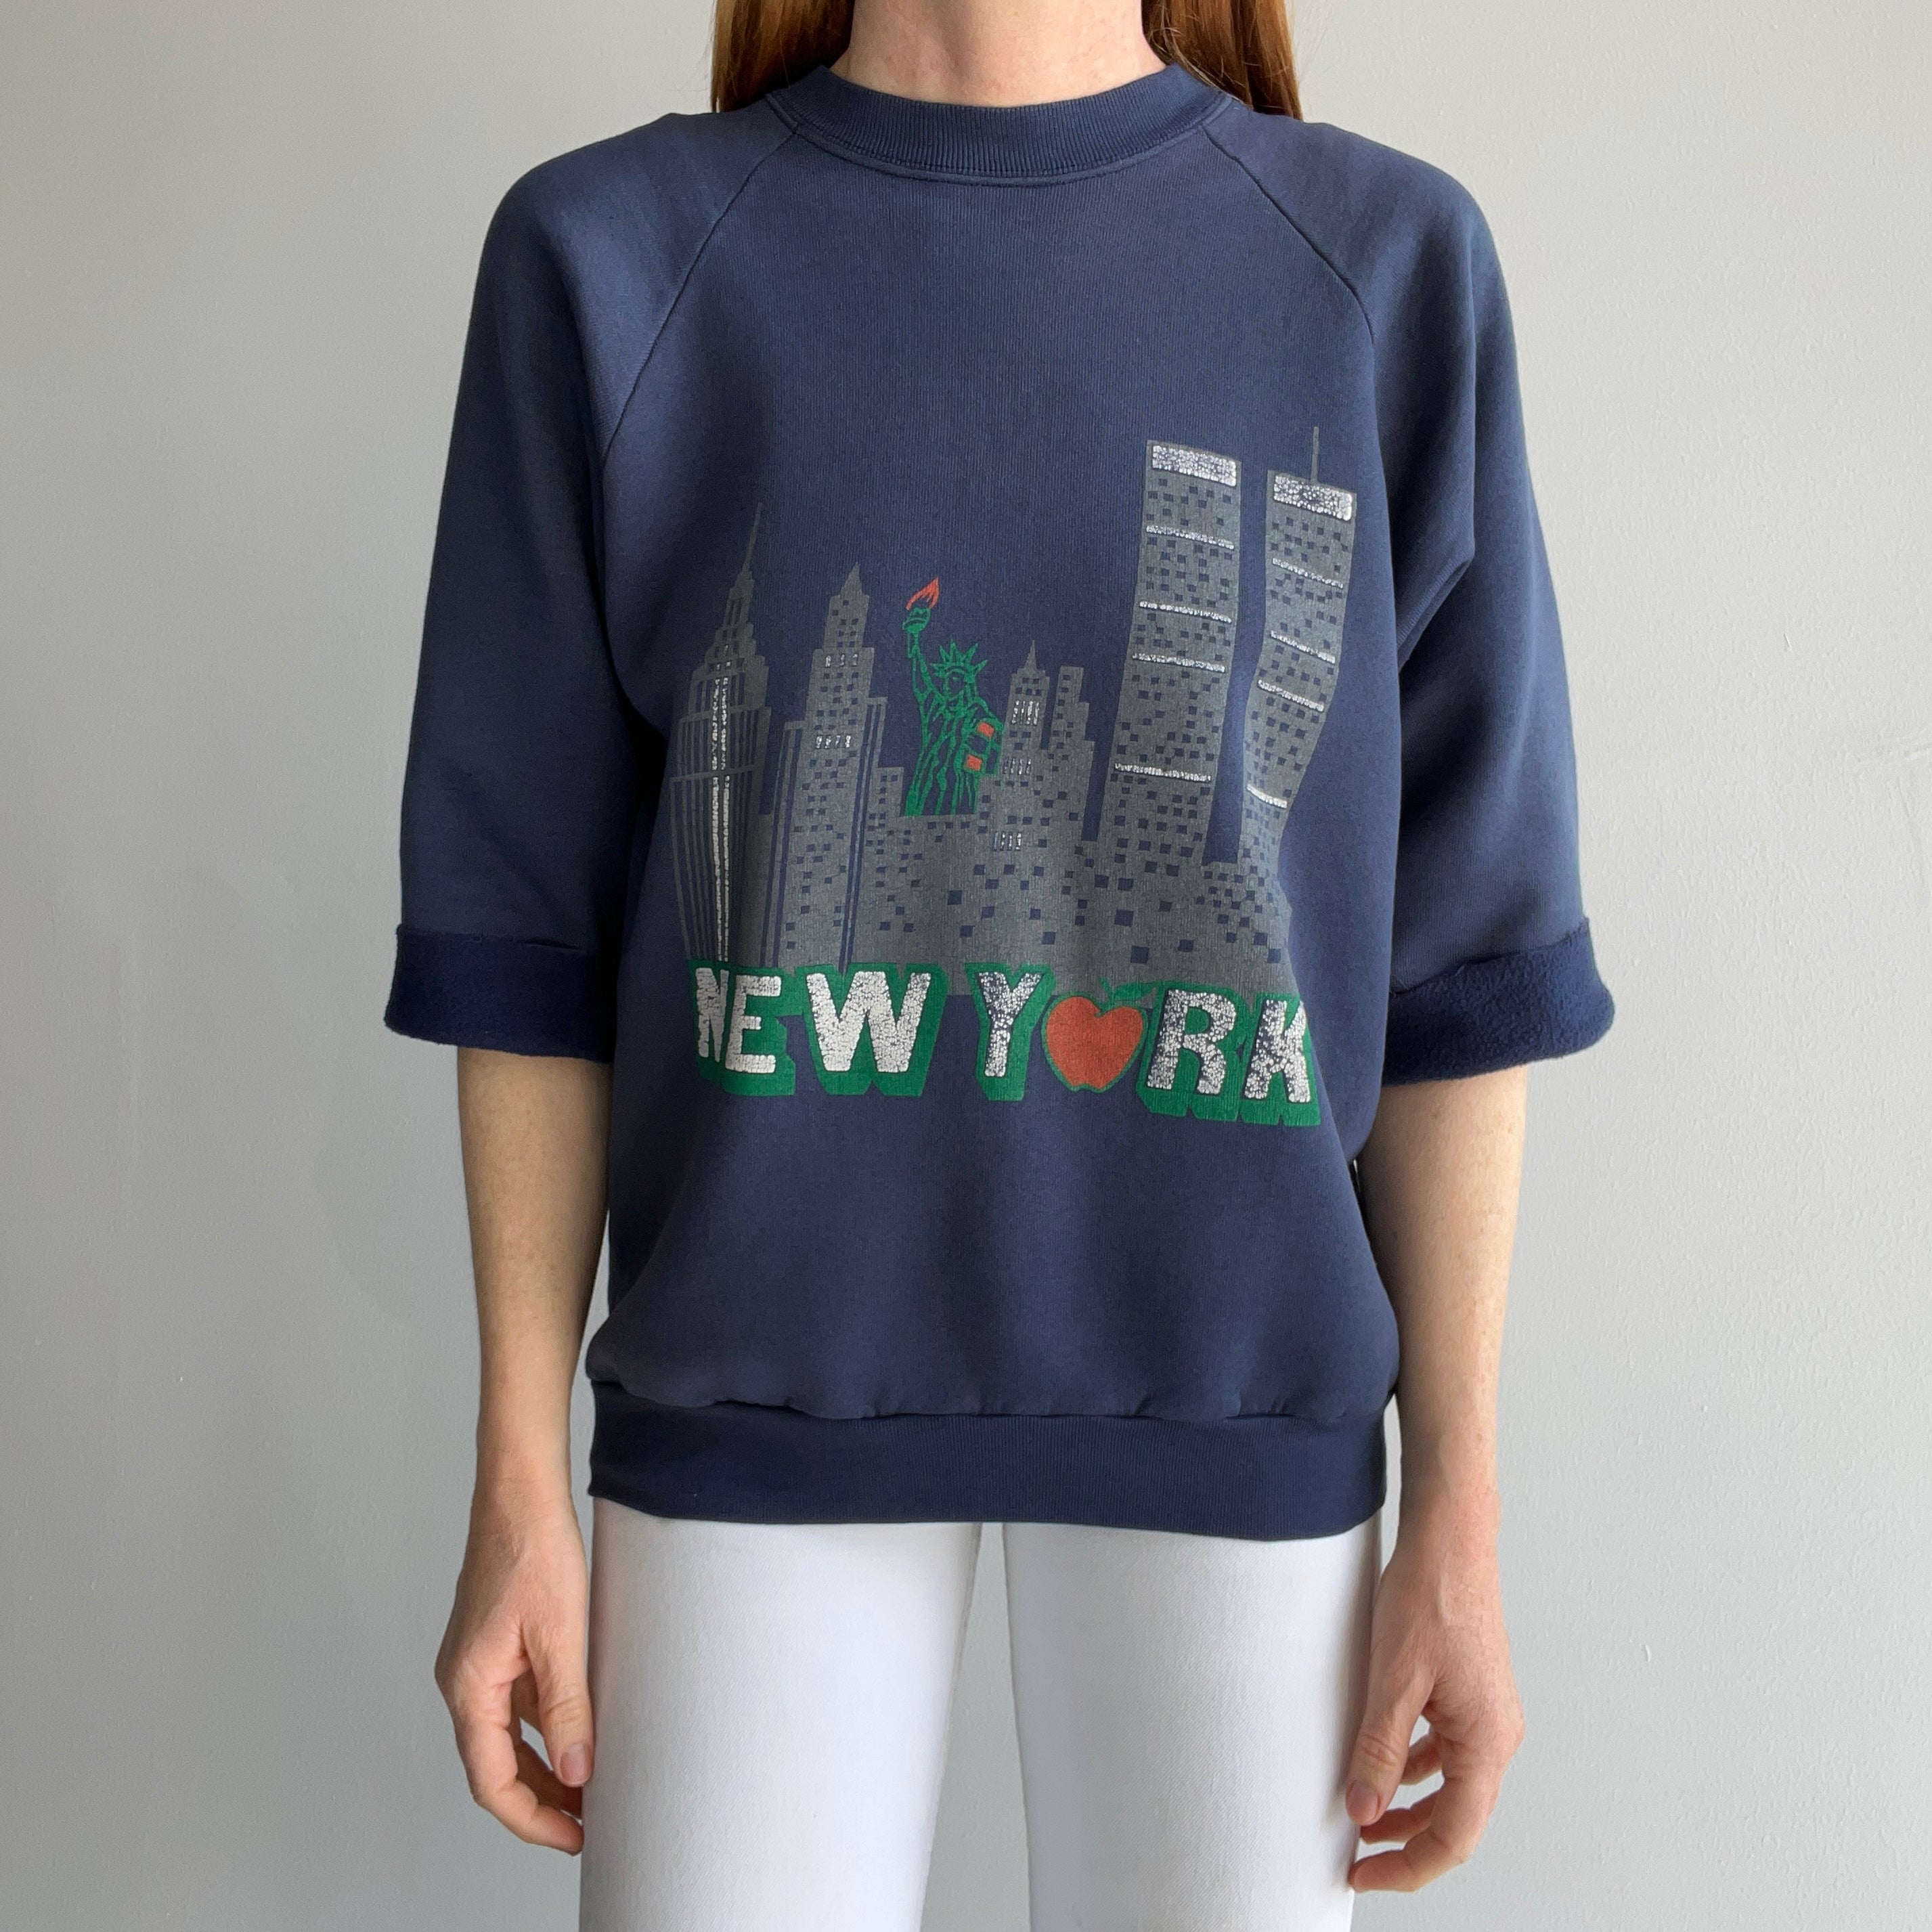 1980s New York Cut Sleeve Sweatshirt - THIS!!!!!!!!!